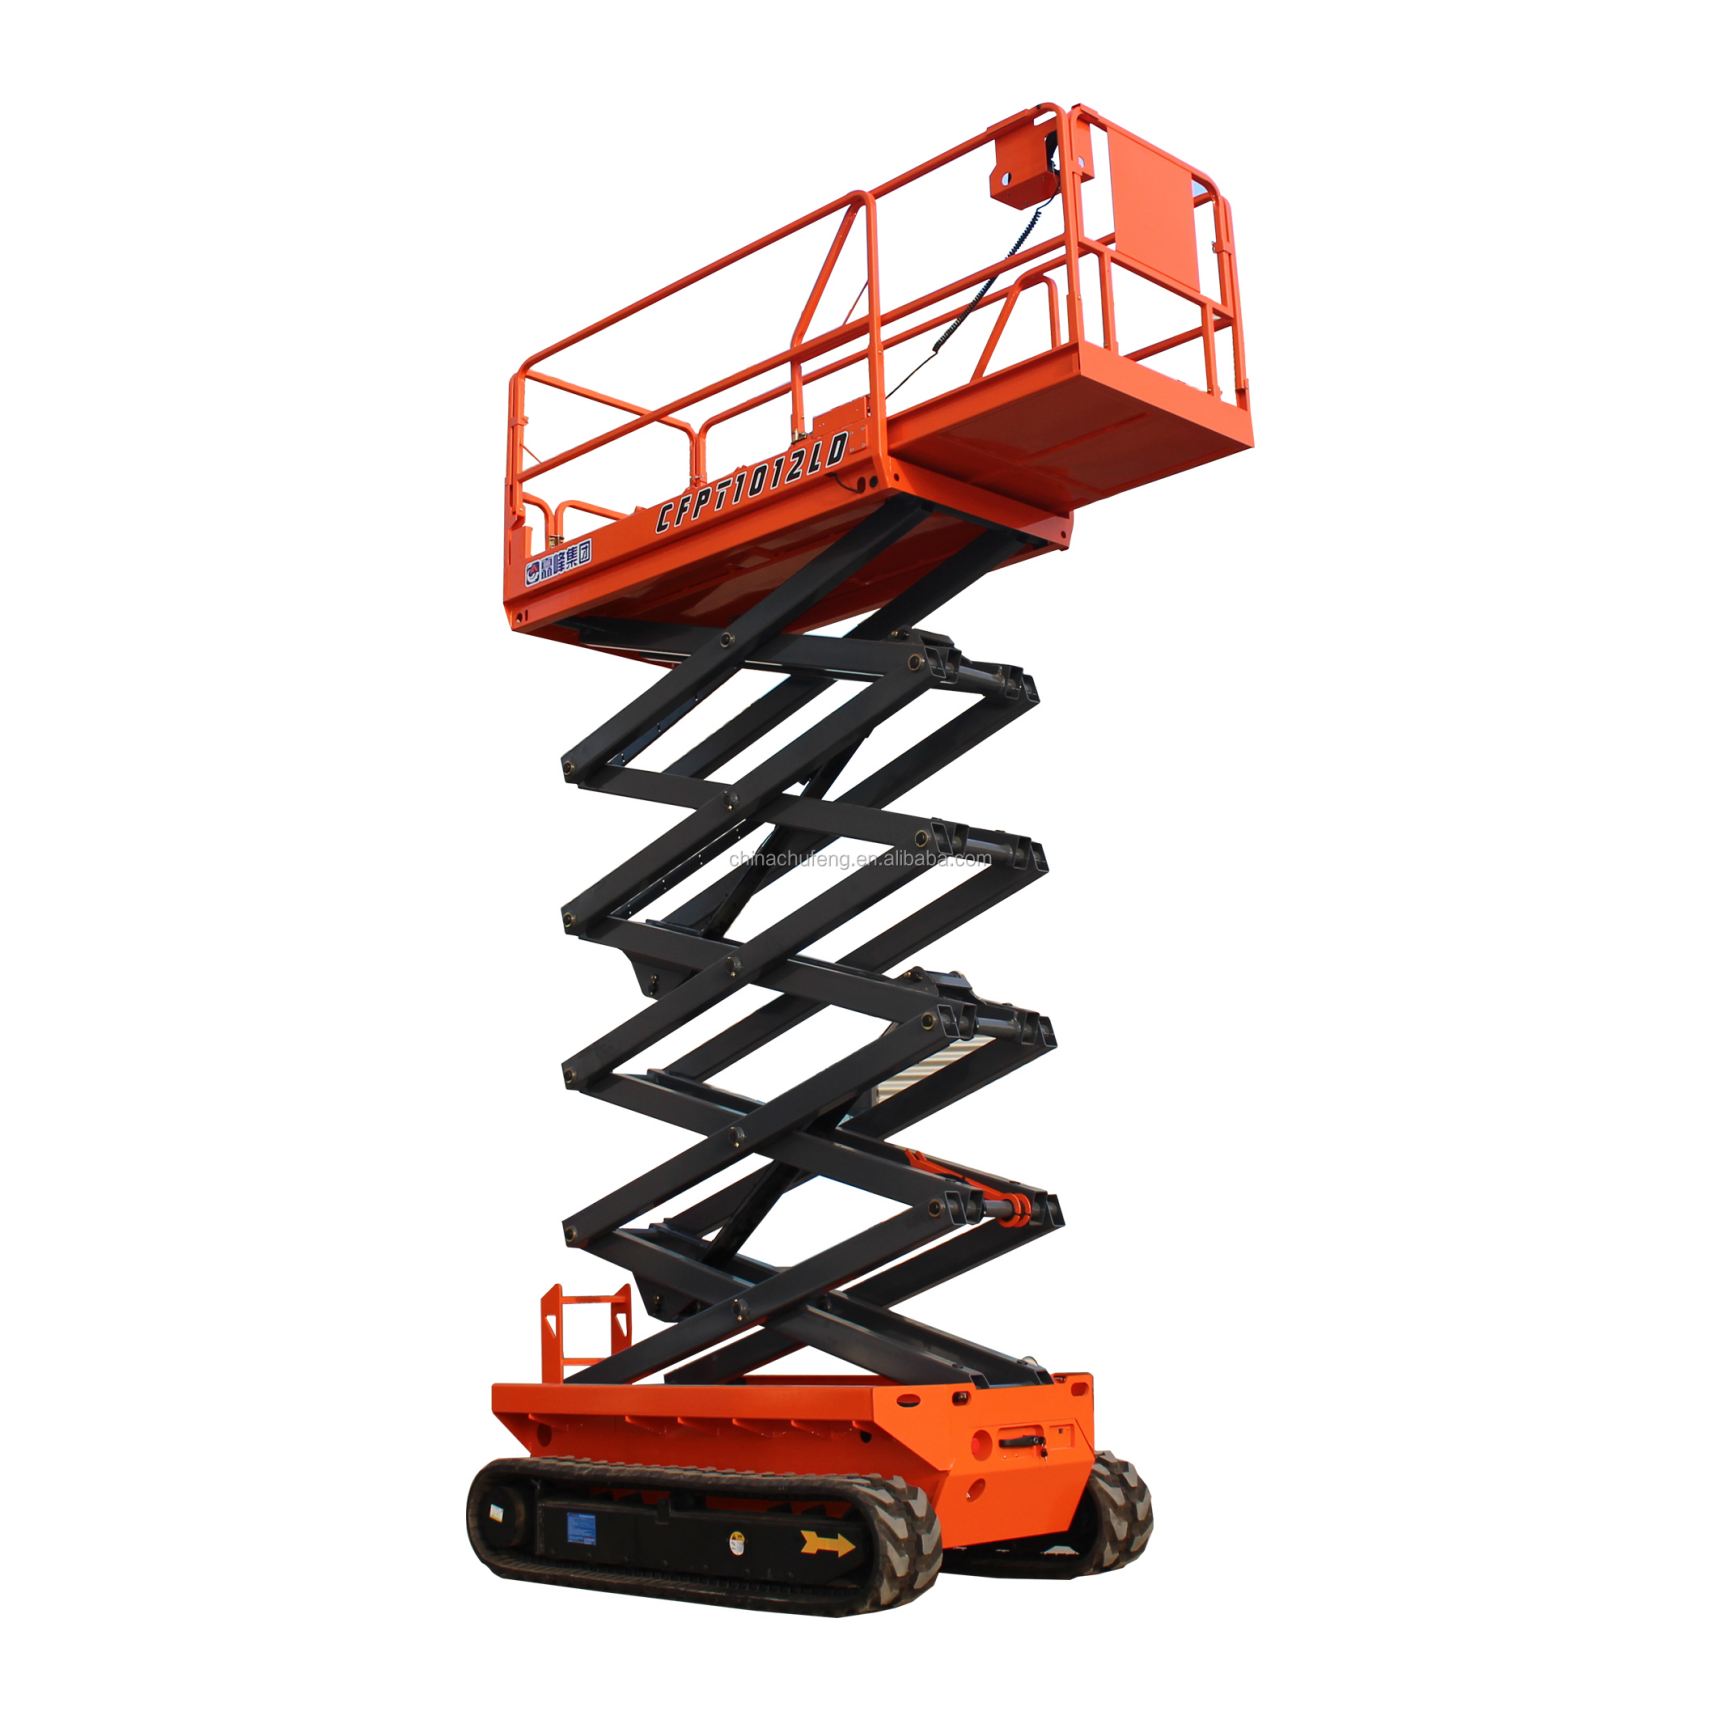 2020 NEW stock 6m 8m 10m 12m 14m CE approved hydraulic lifting platform/tracked scissor lift